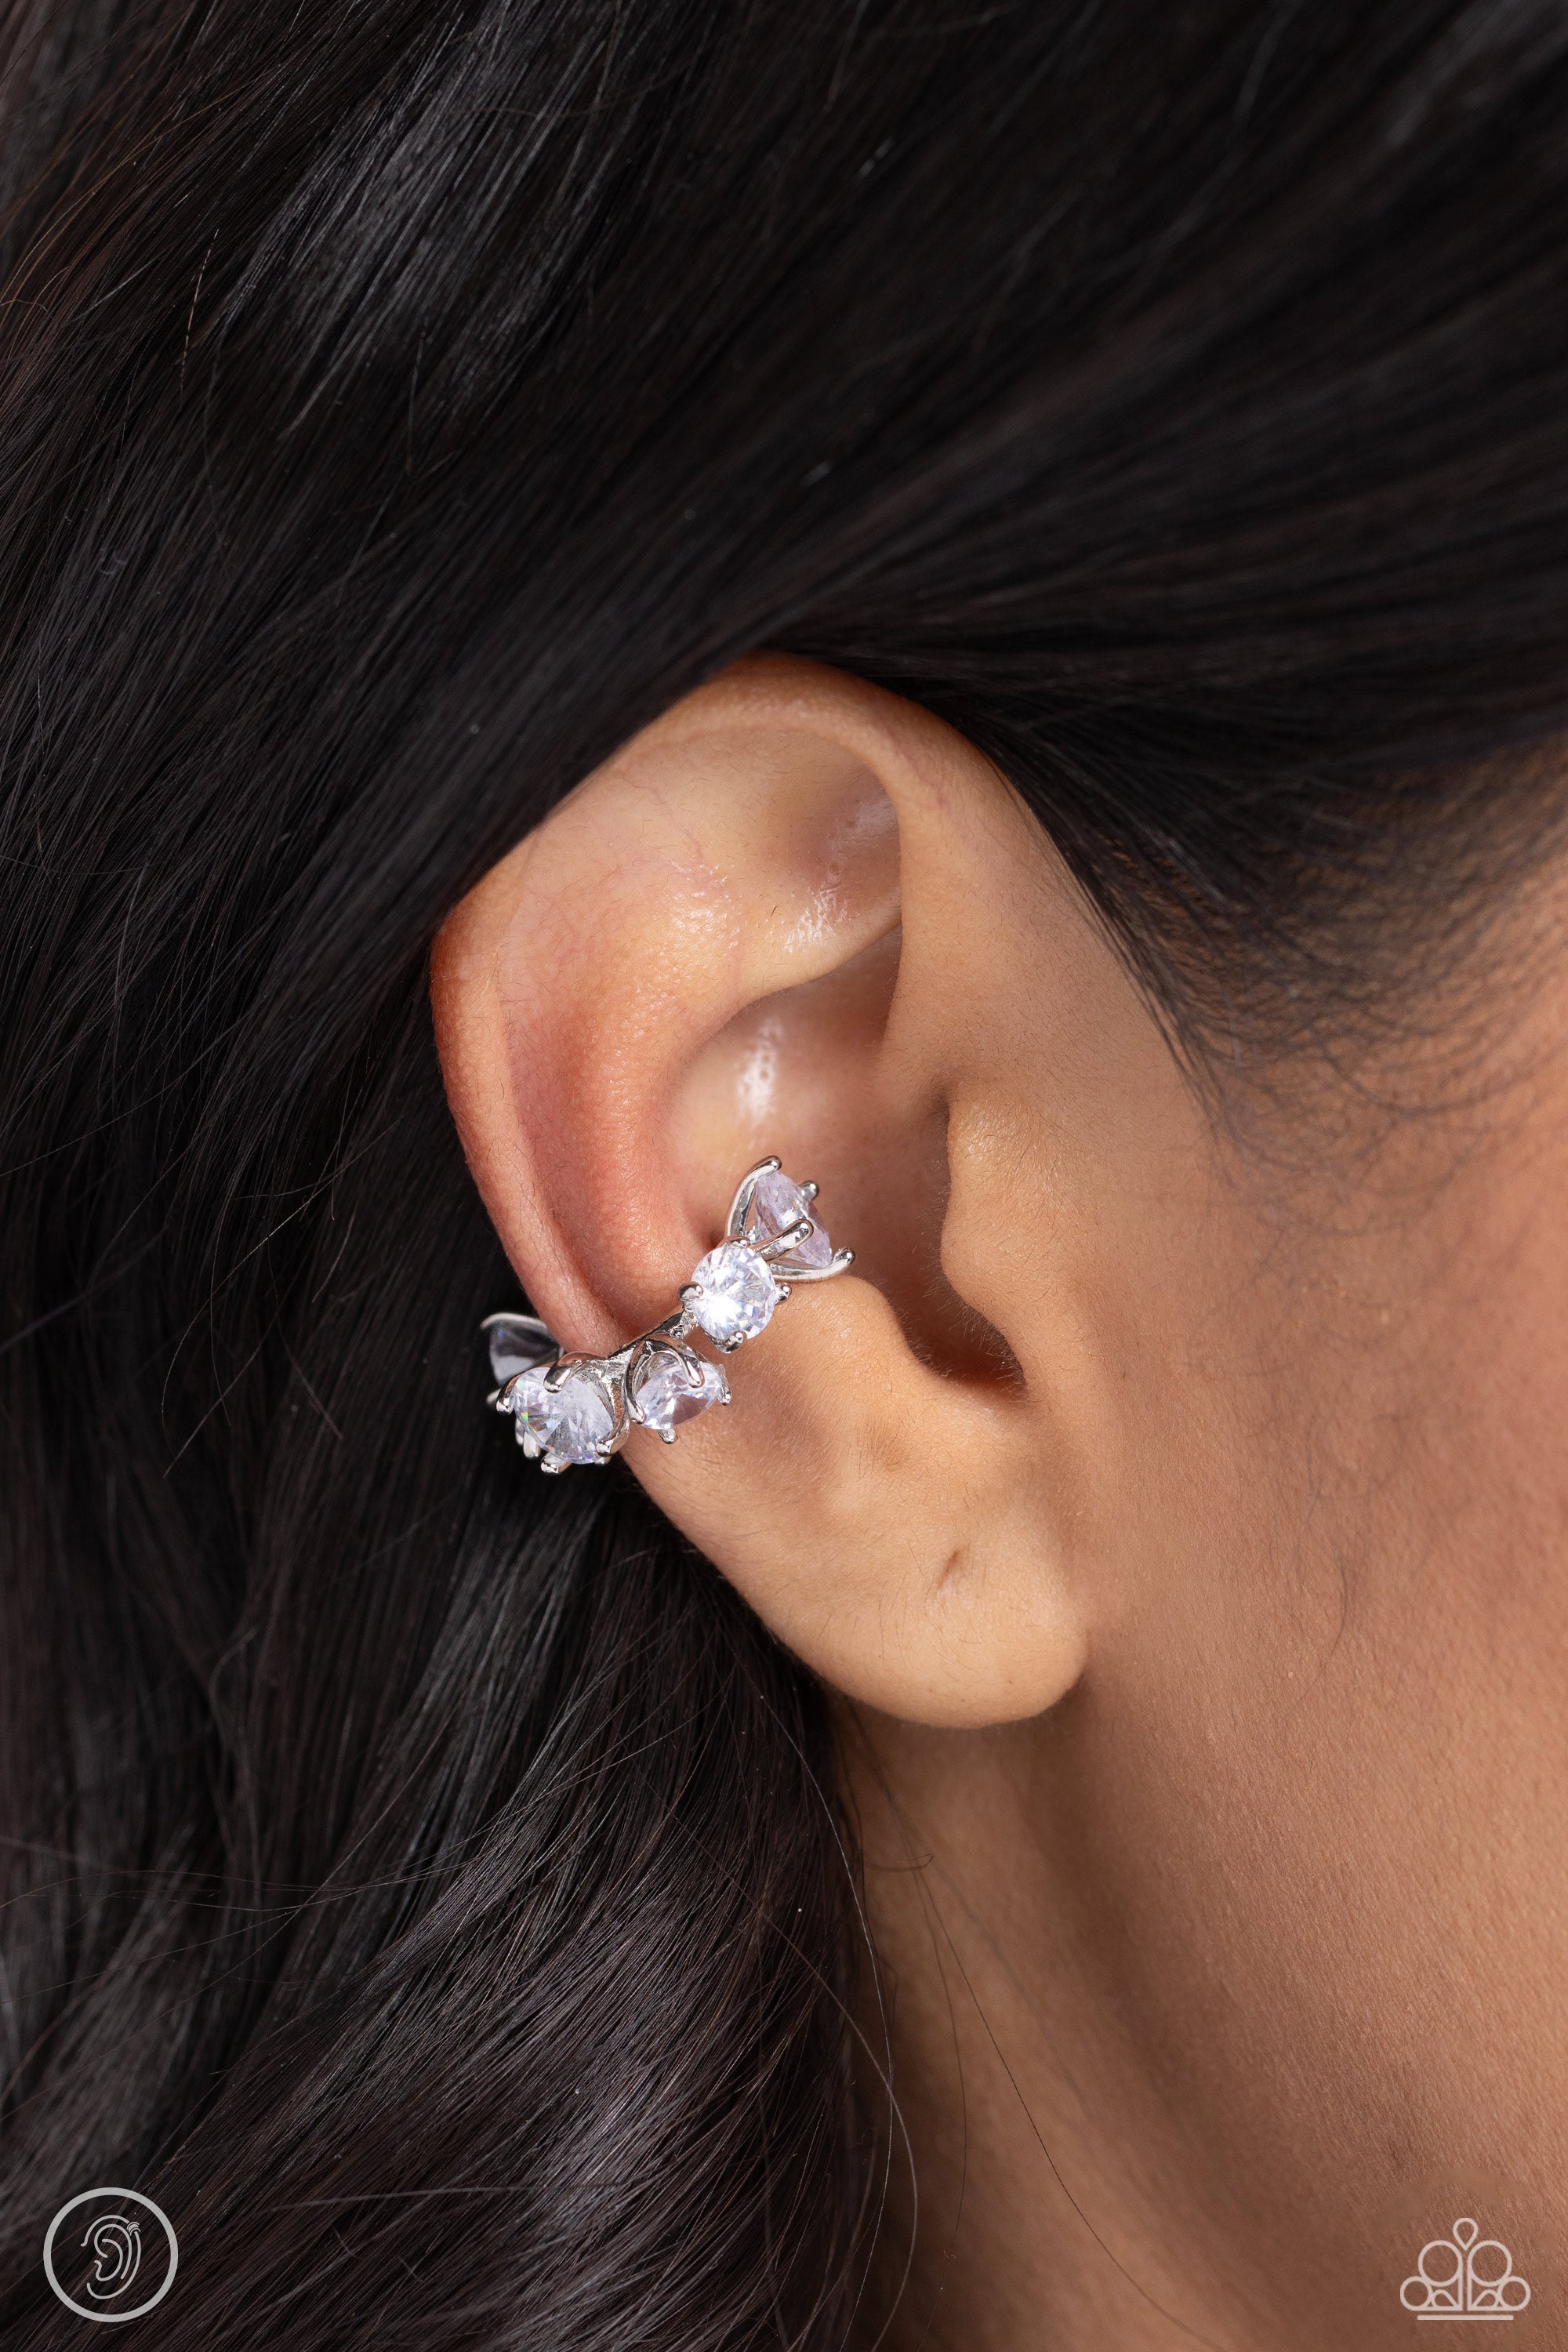 Breathtaking Blend White Rhinestone Cuff Earrings - Paparazzi Accessories- lightbox - CarasShop.com - $5 Jewelry by Cara Jewels